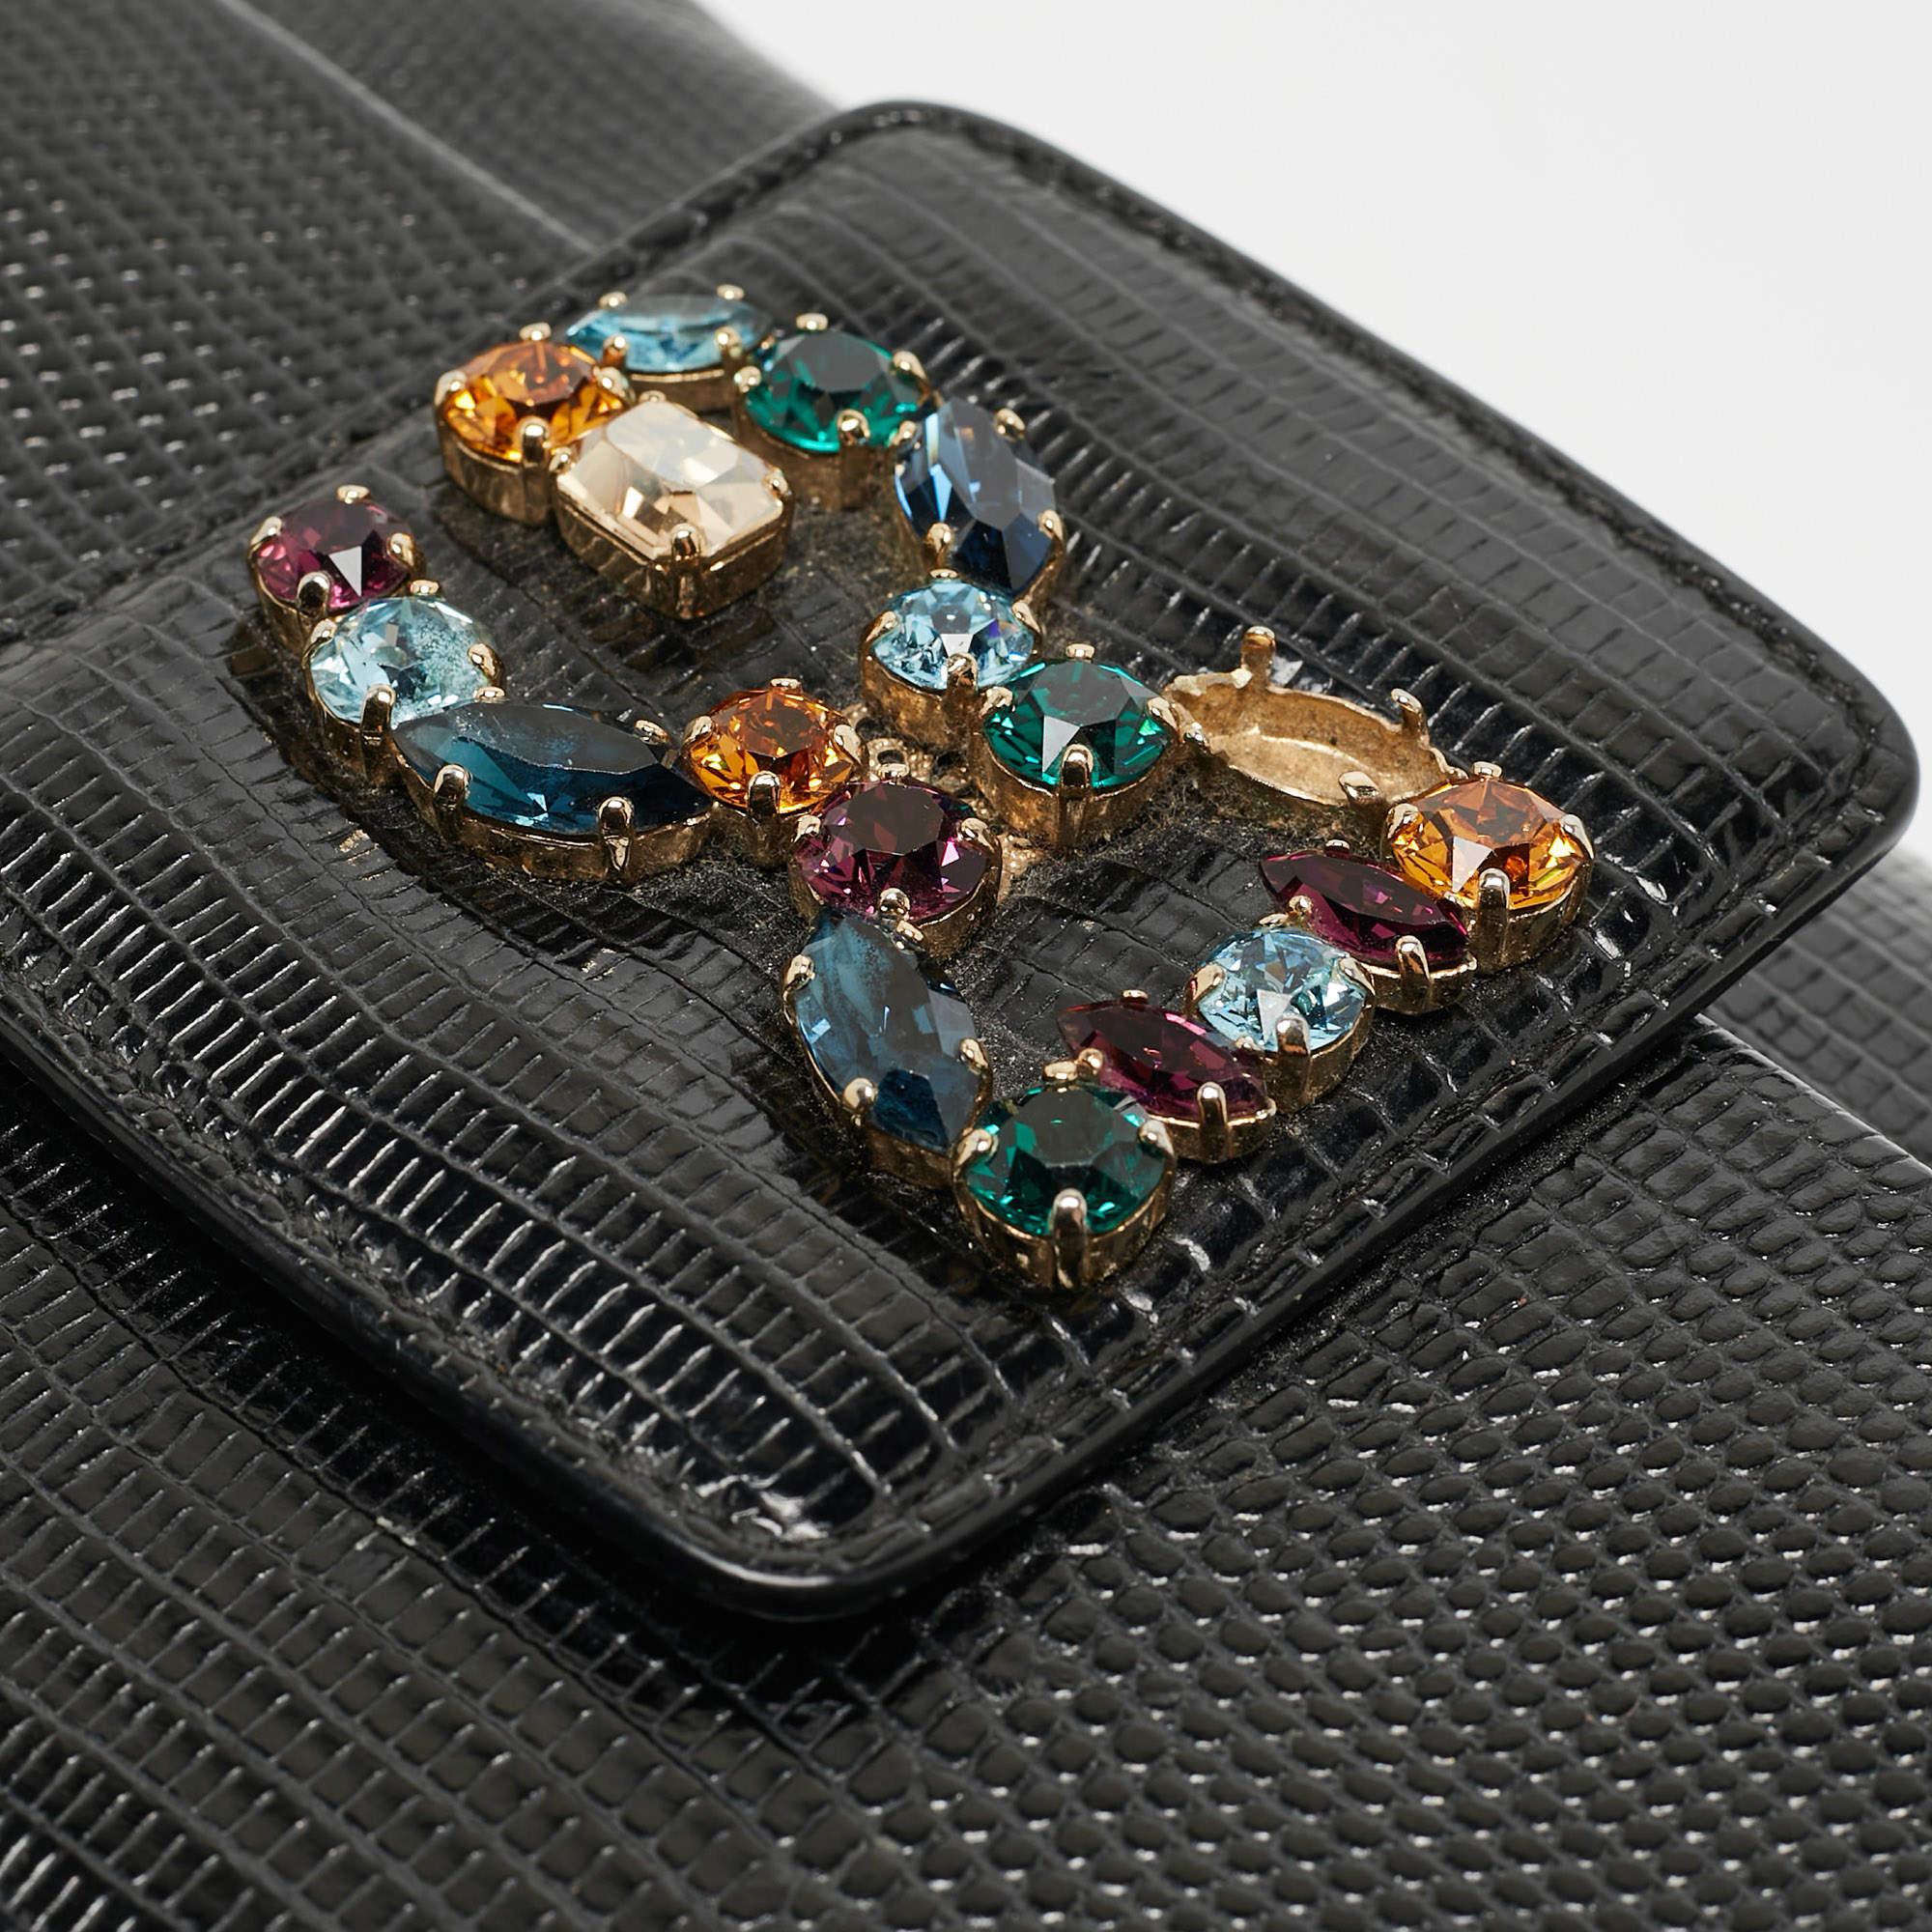 Dolce & Gabbana Black Lizard Embossed Leather Mini DG Millennials Crossbody Bag 15